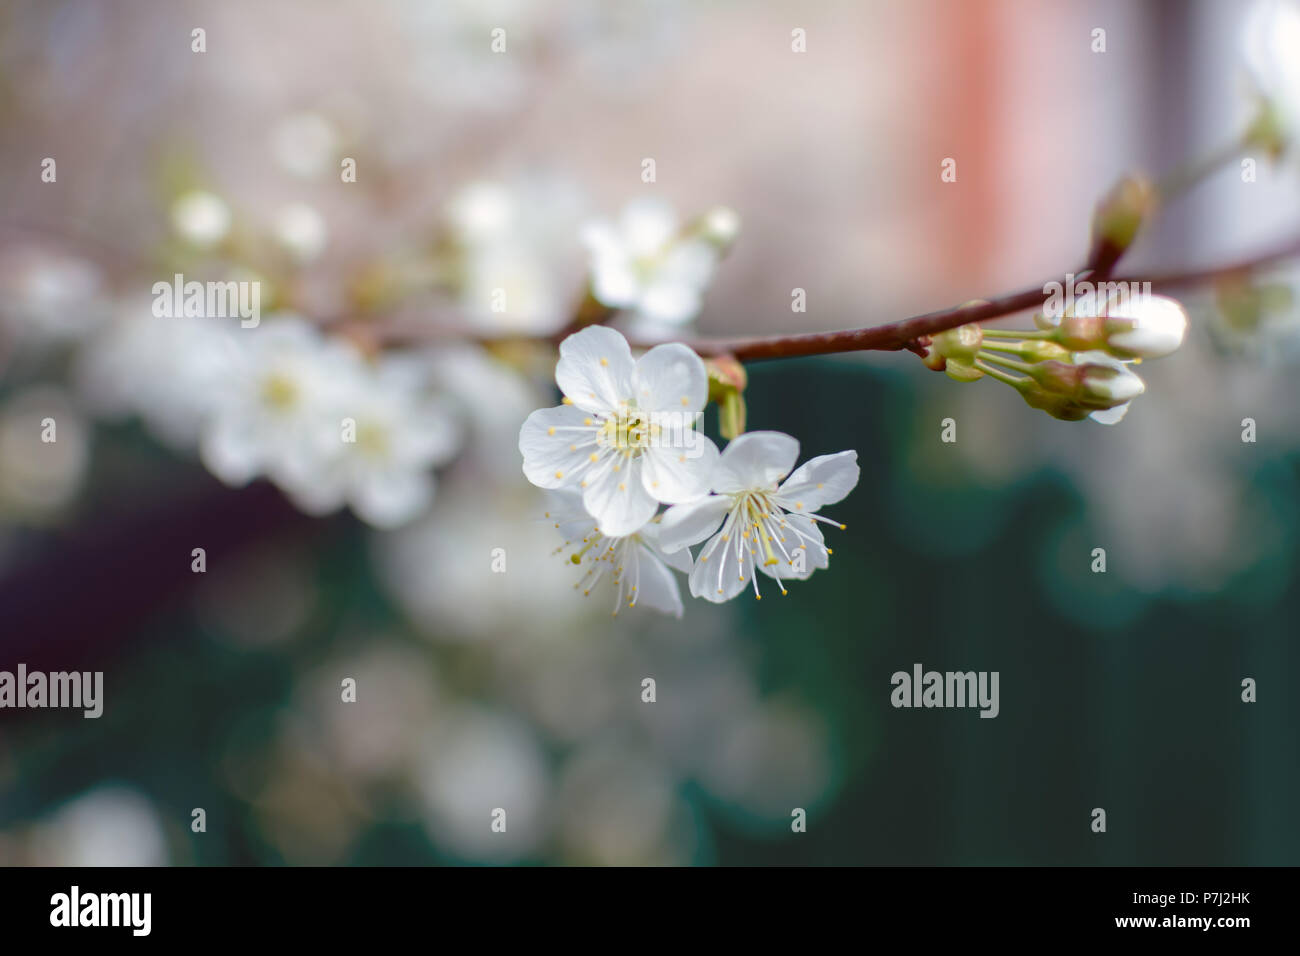 White Cherry flowers or Prunus cerasus flowers, cherry tree blossom. Closeup photo of white cherry flowers, soft focus. Stock Photo